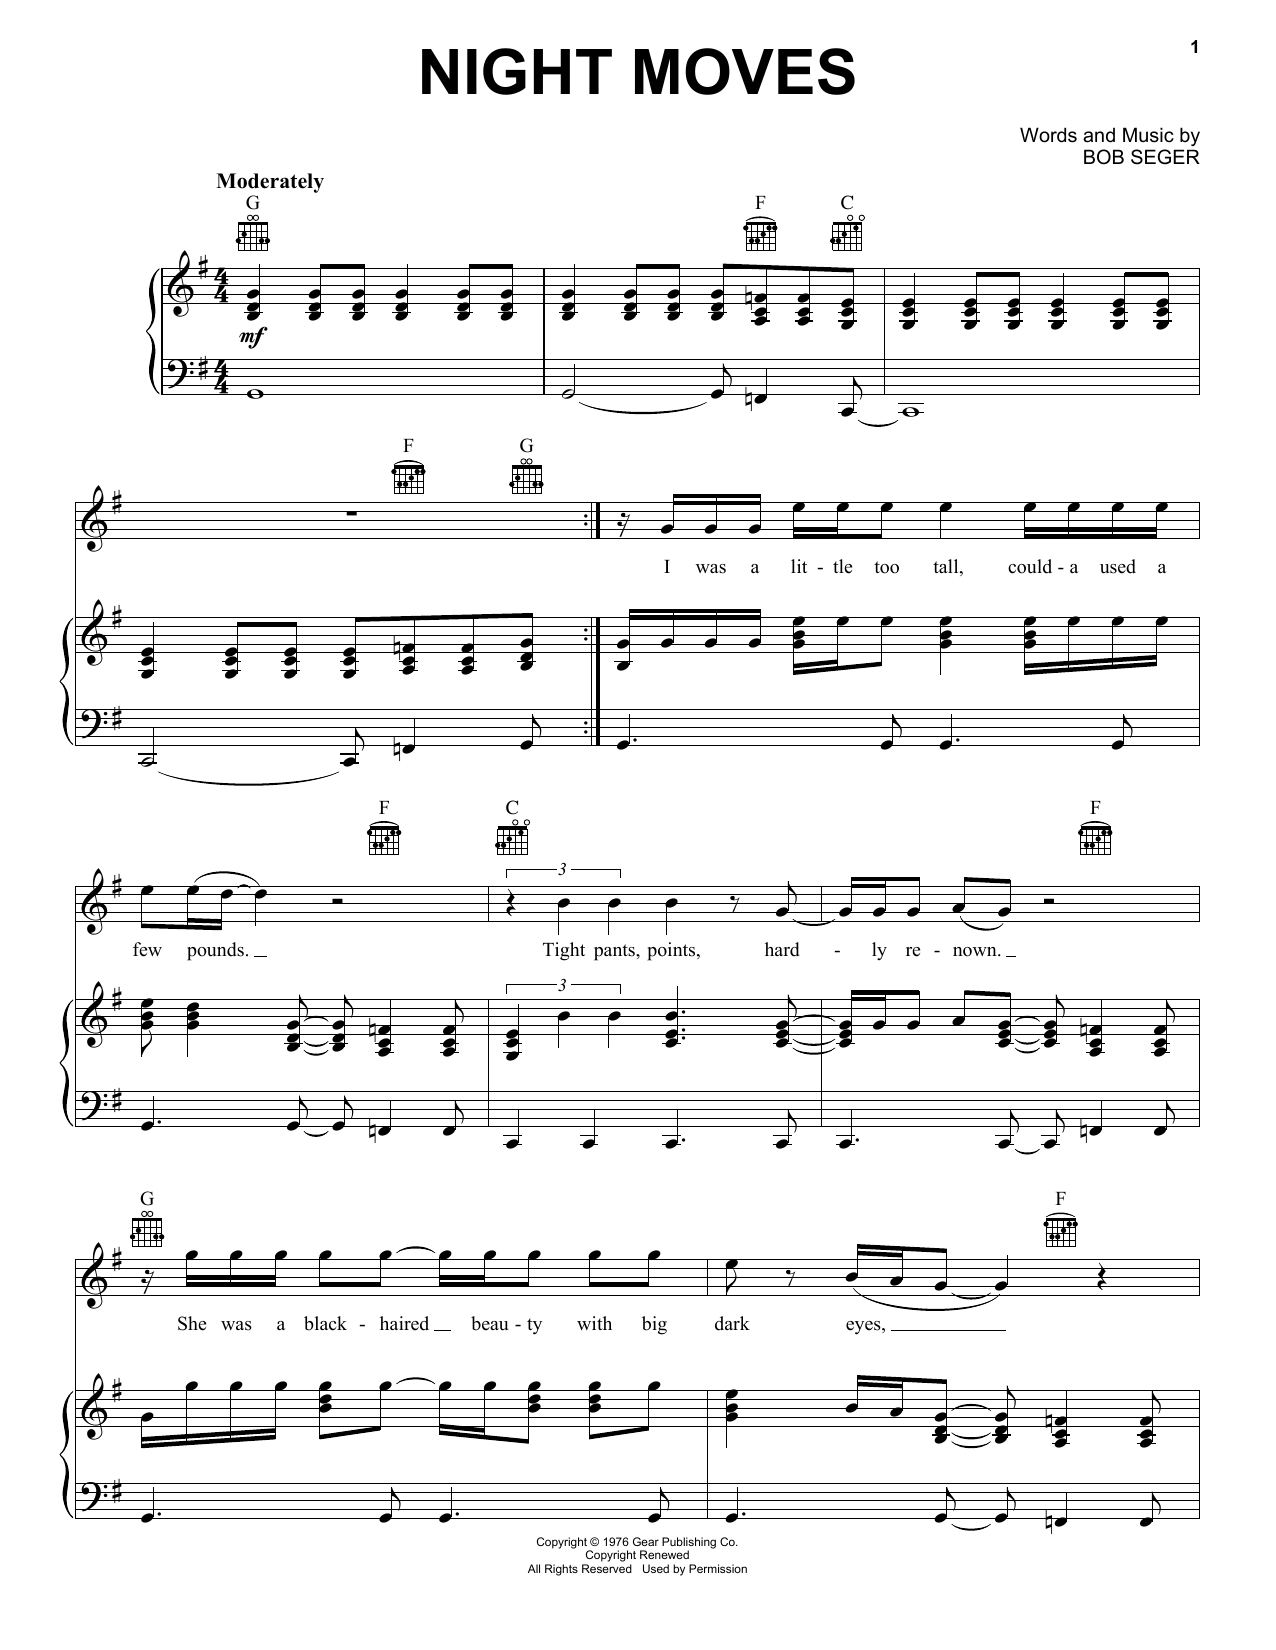 Bob Seger Night Moves Sheet Music Notes & Chords for Guitar Tab Play-Along - Download or Print PDF